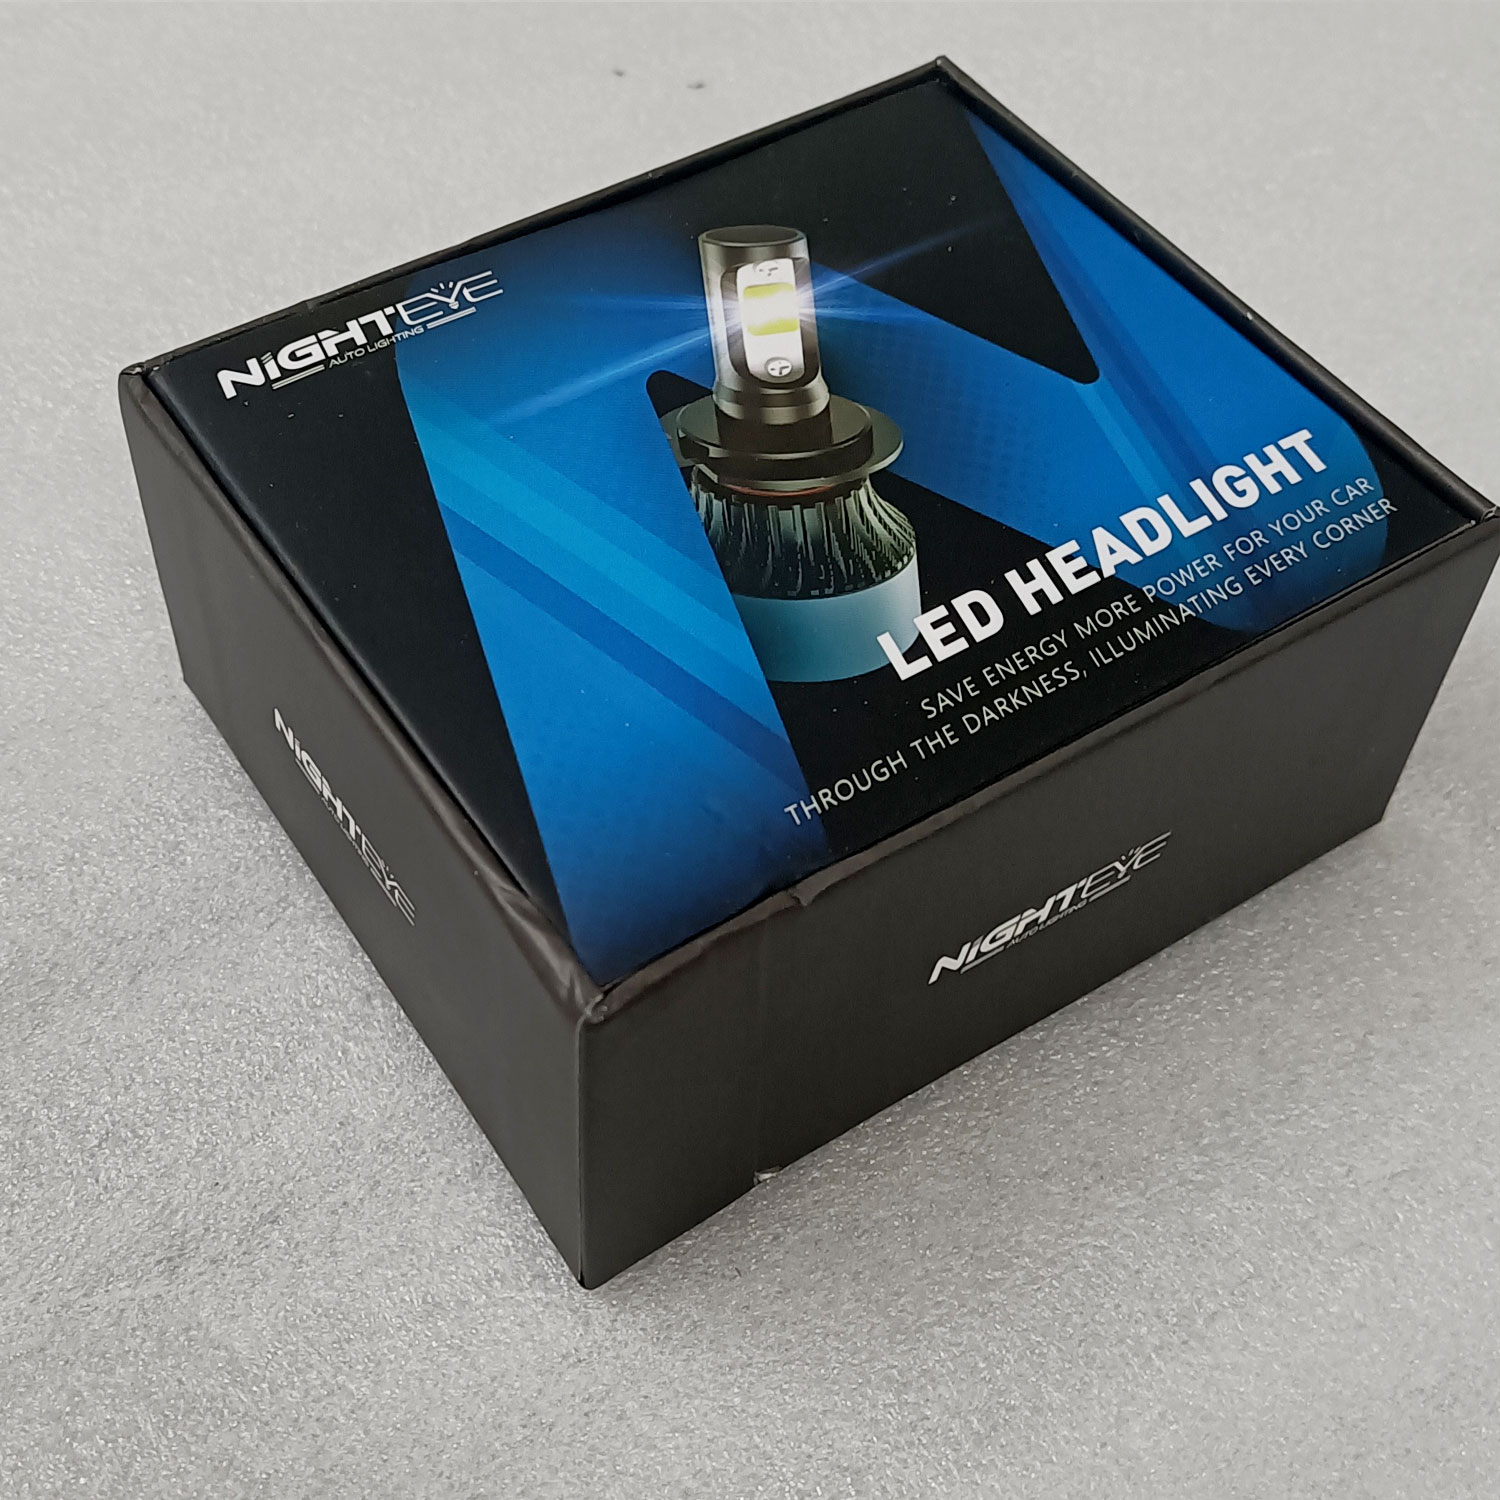 The best H7 LED headlight bulbs for your track car